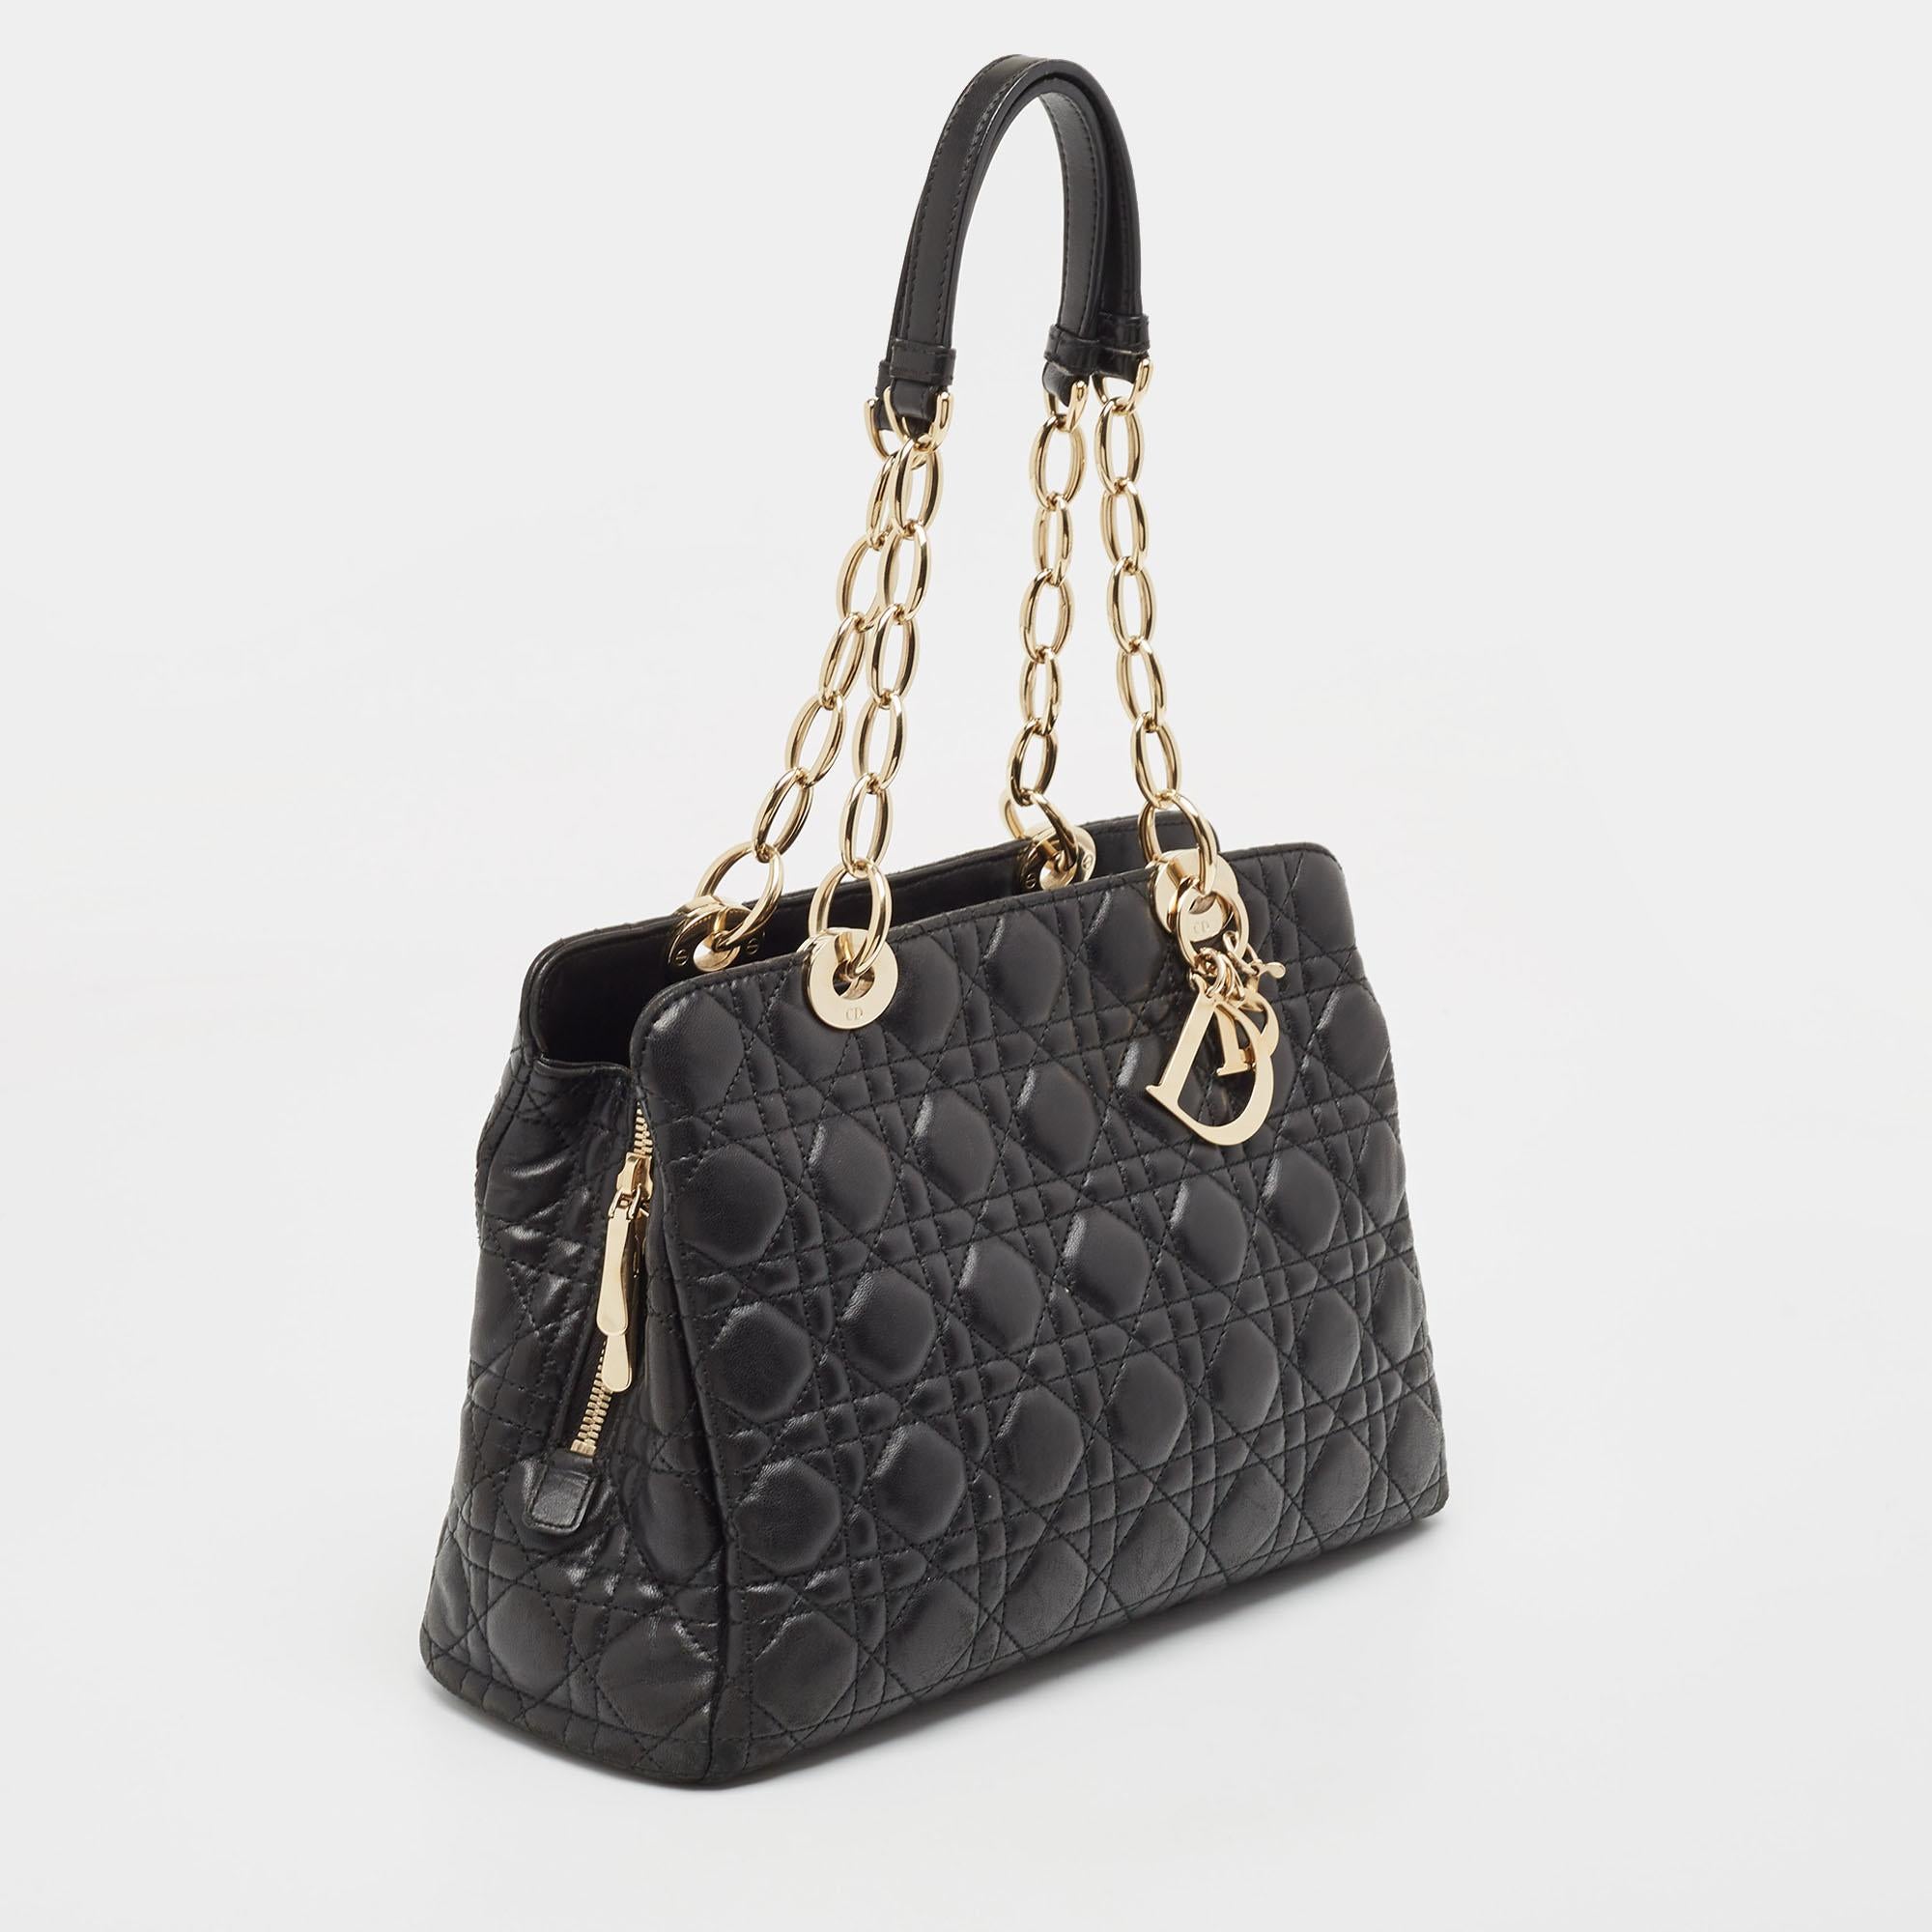 Dior Black Cannage Leather Soft Lady Dior Satchel In Good Condition For Sale In Dubai, Al Qouz 2